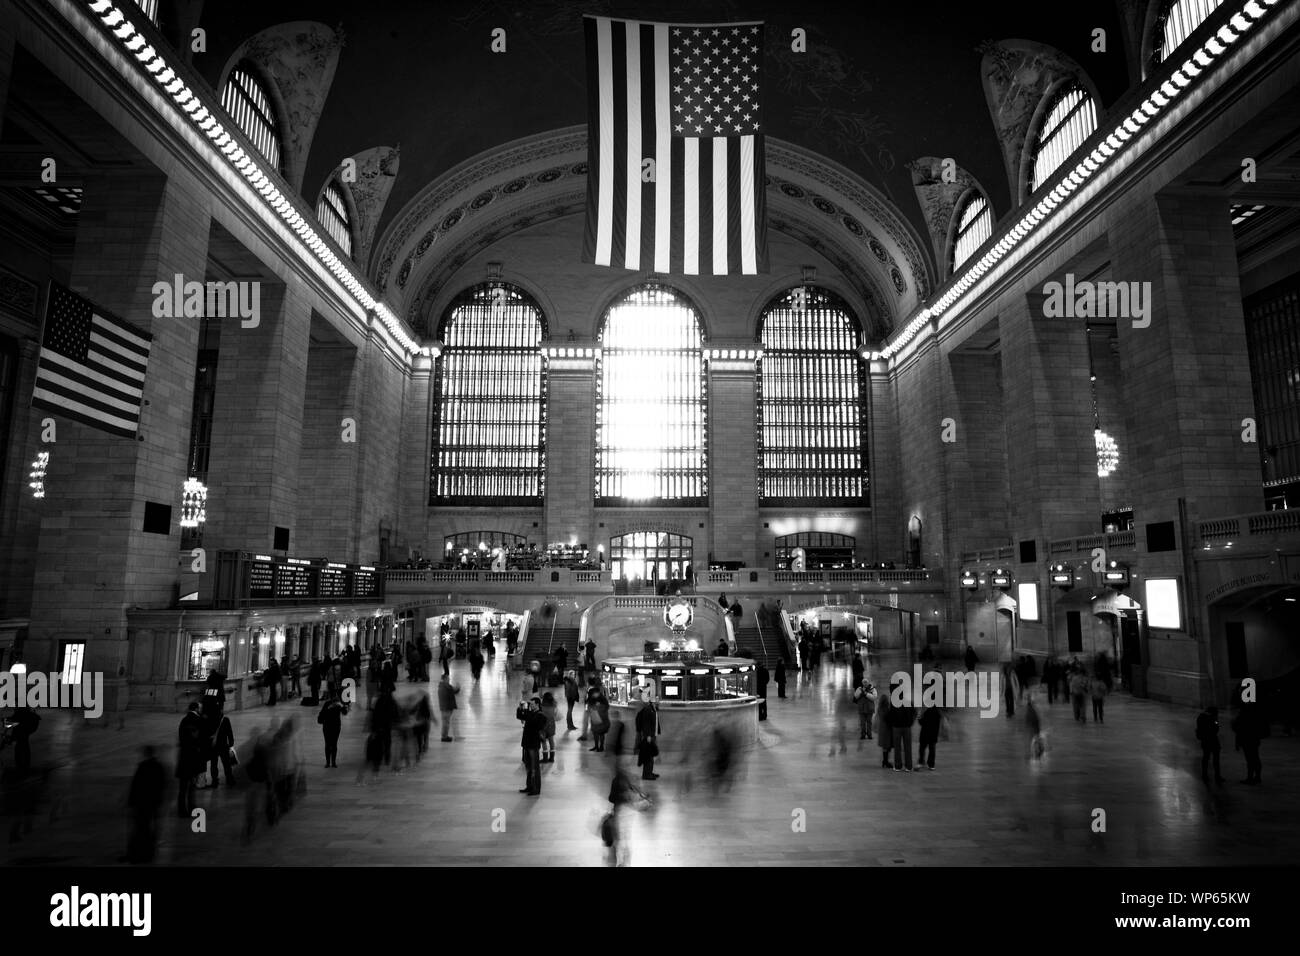 Der Terminal des Grand Central Terminal Bahnhof in NYC. Stockfoto